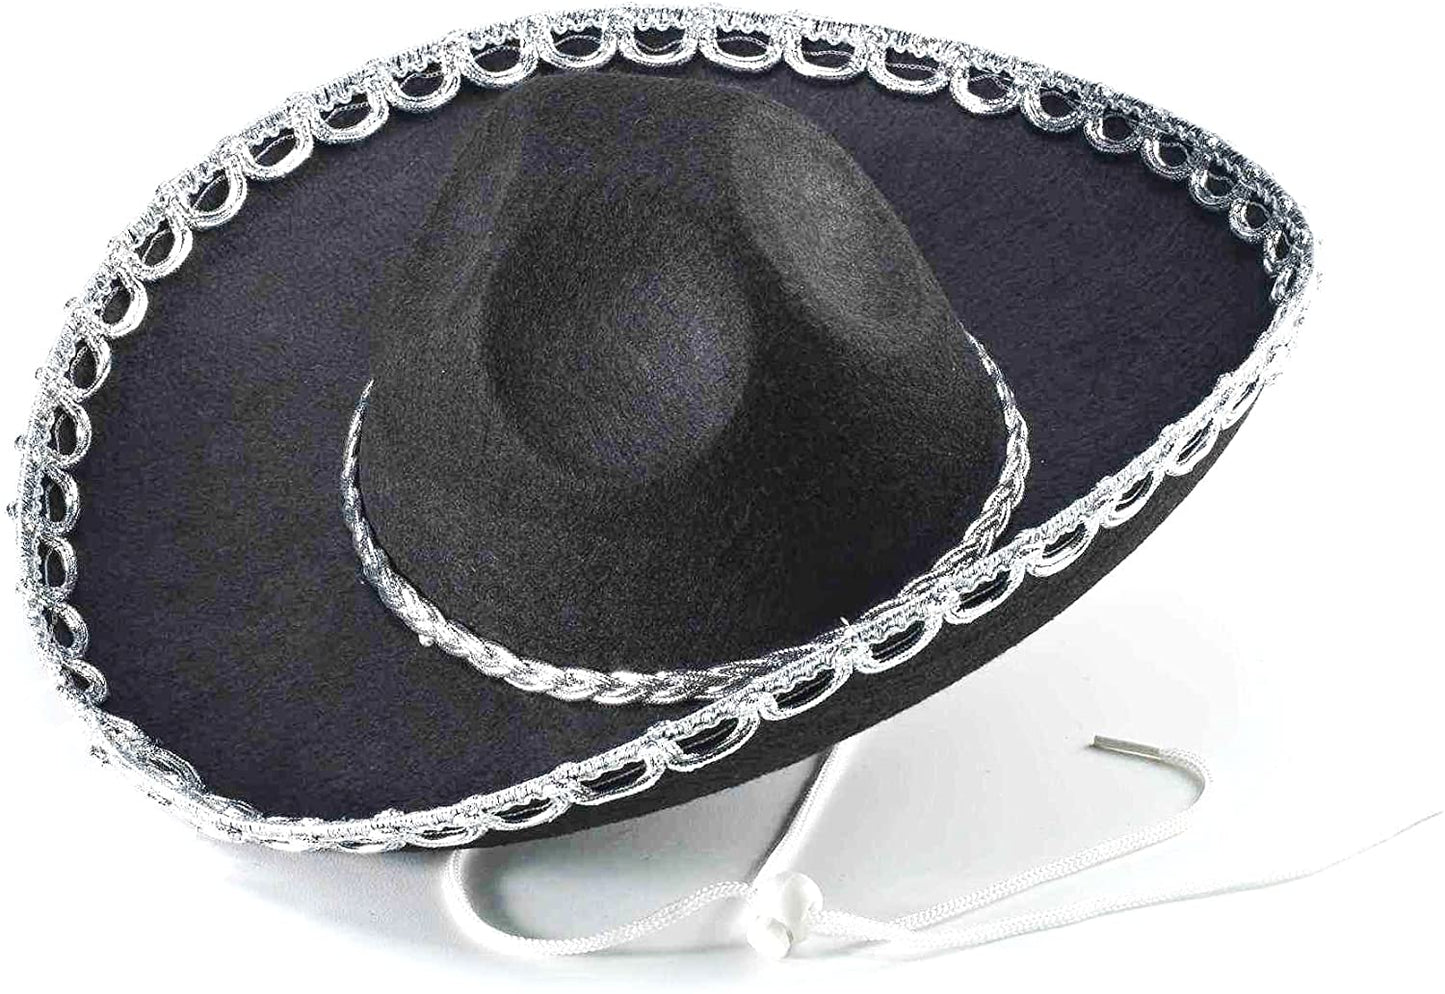 Sombrero with Small Brim Mexican Western Black Costume Hat (Child Size)